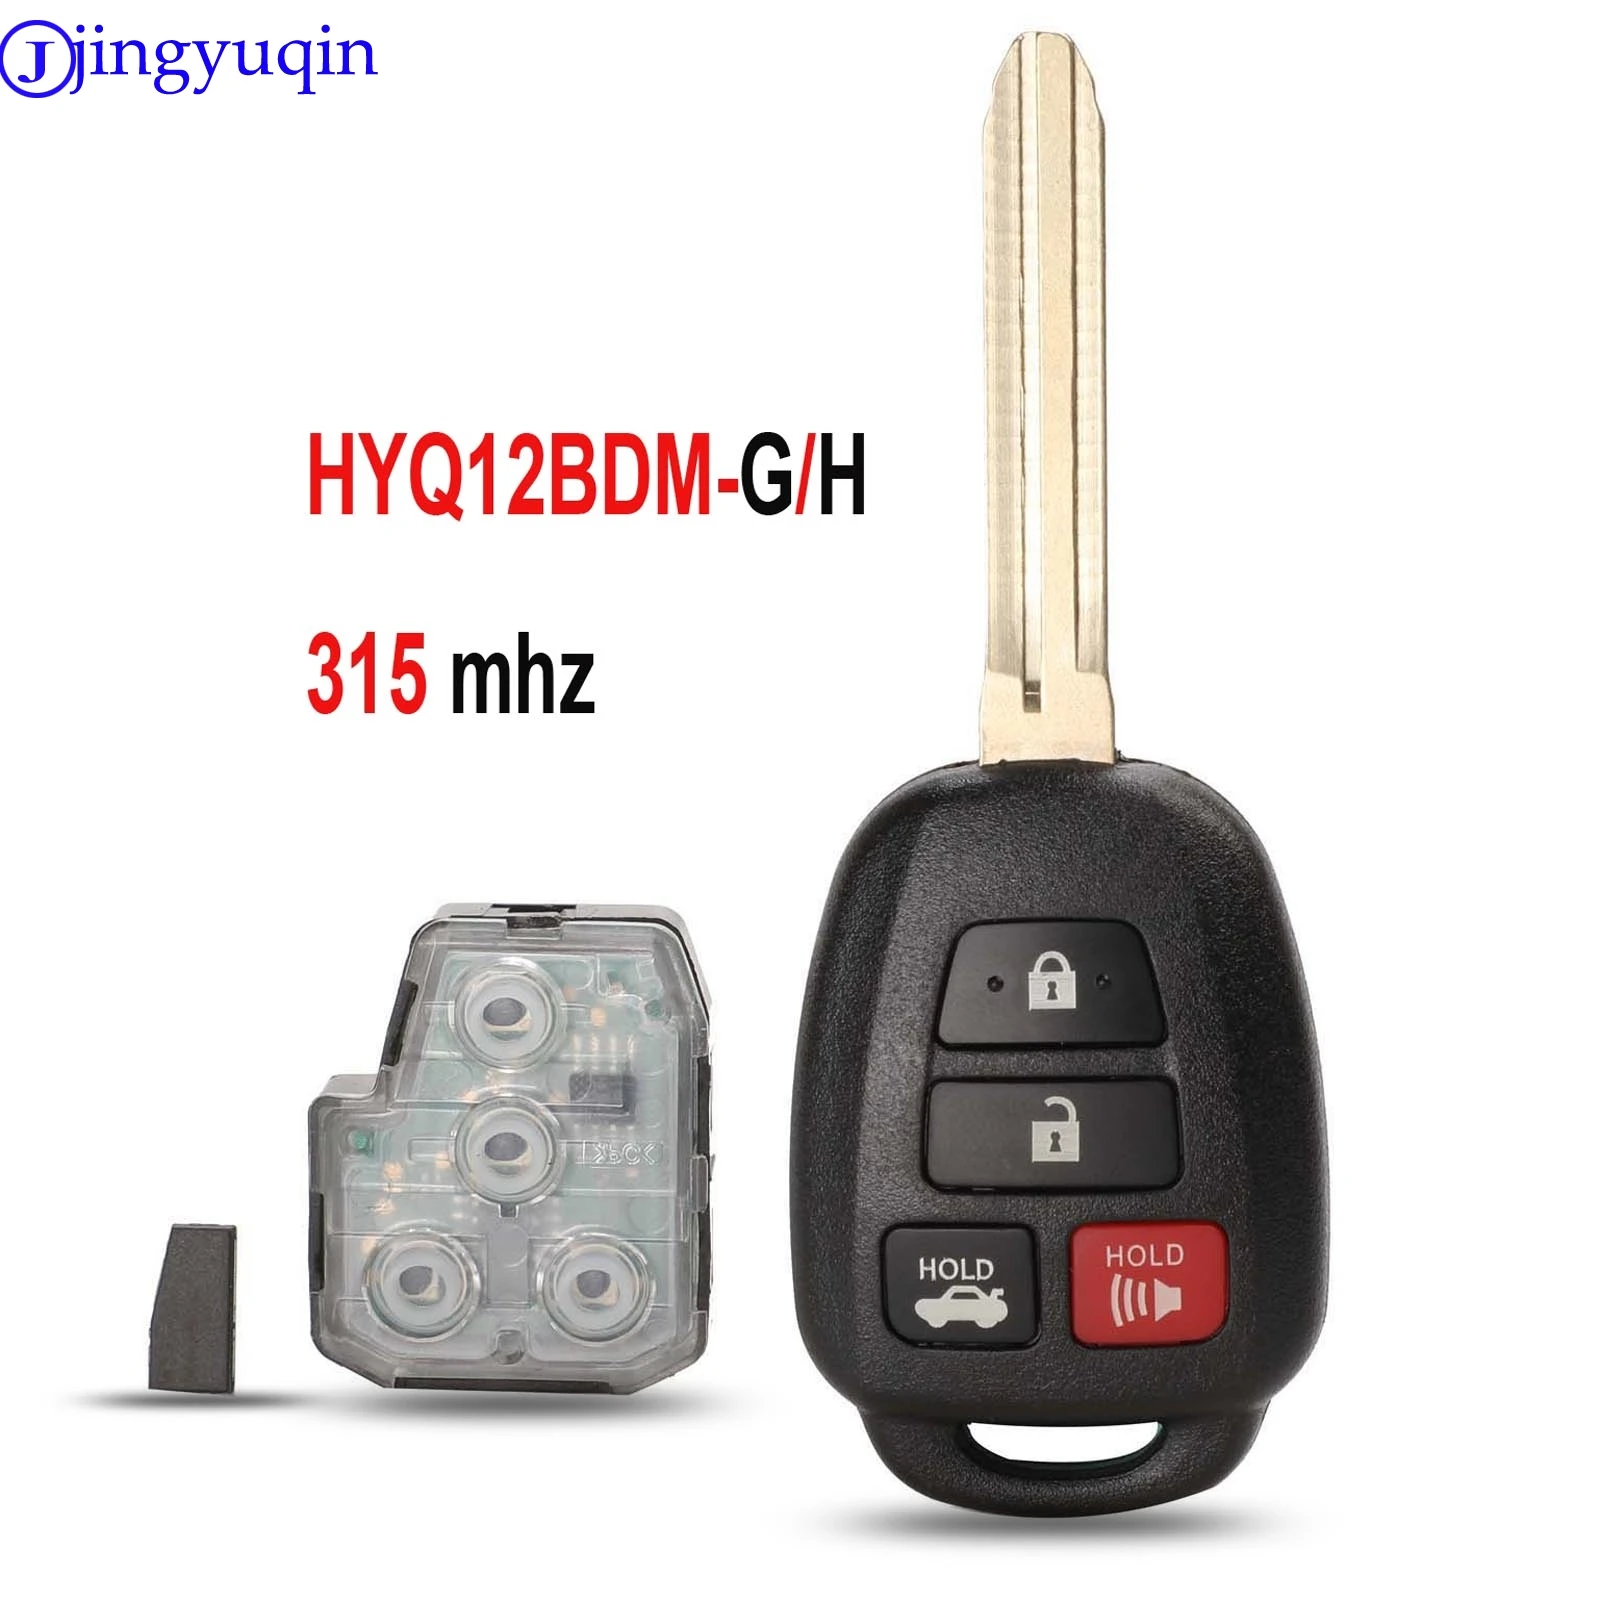 Jingyuqin 314.4 Mhz tecla del control Remoto Para Toyota Camry G/ H Chip opcional 2012-2017 HYQ12BDM HYQ12BEL 3